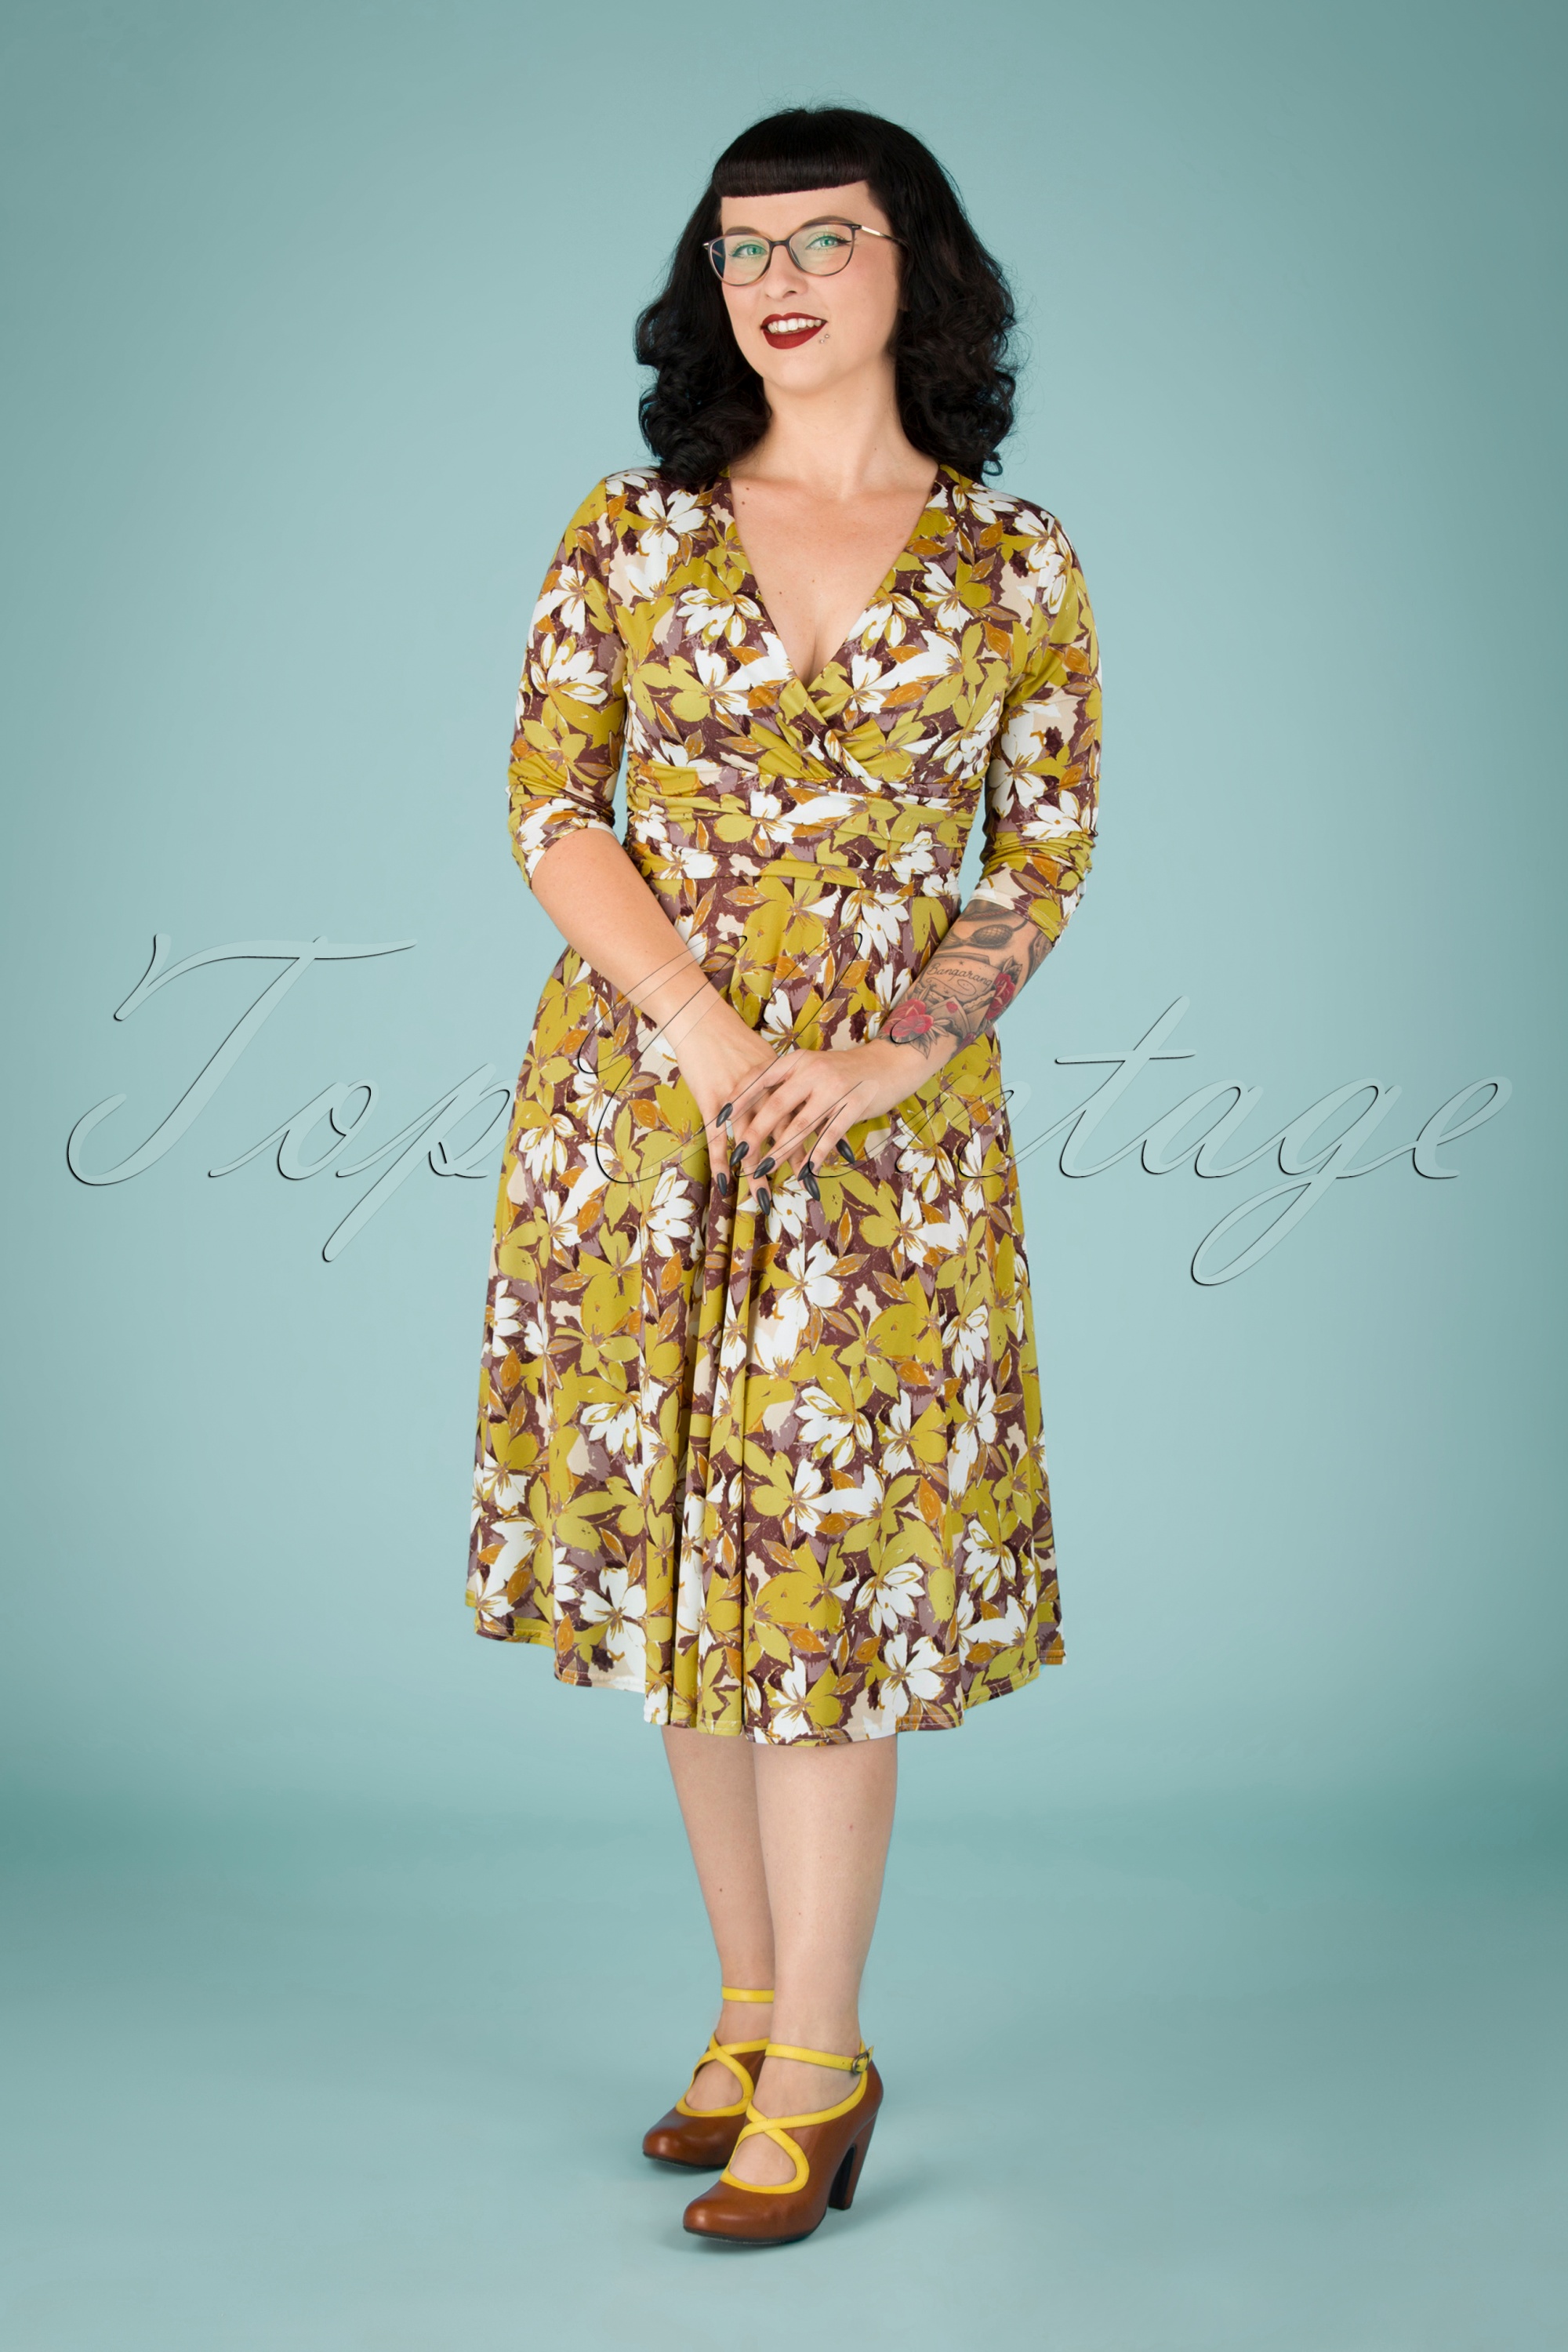 Vintage Chic for Topvintage - Carolina bloemen swing jurk in ivoor en mosterd